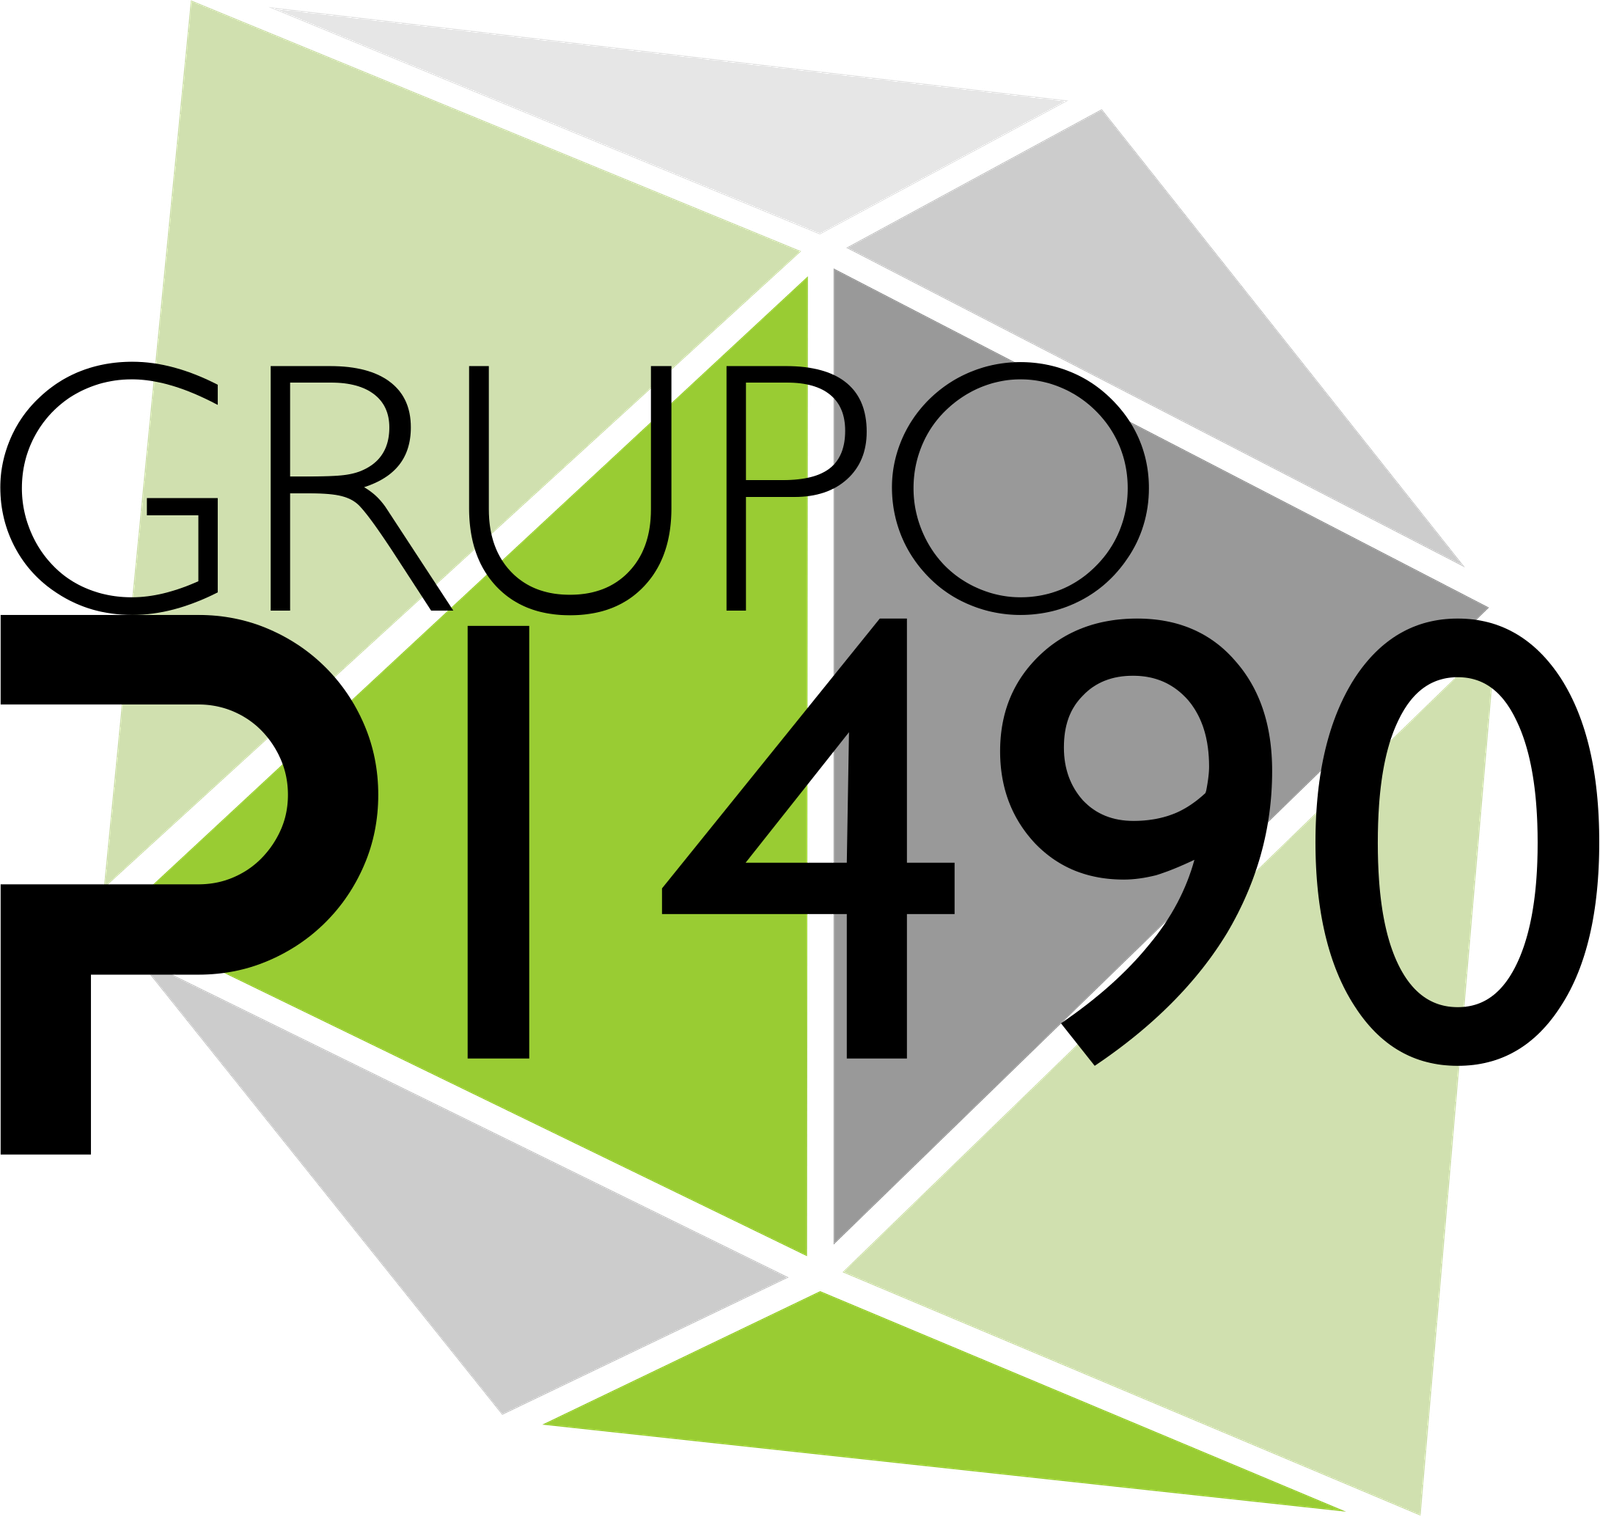 grupop1490 logo